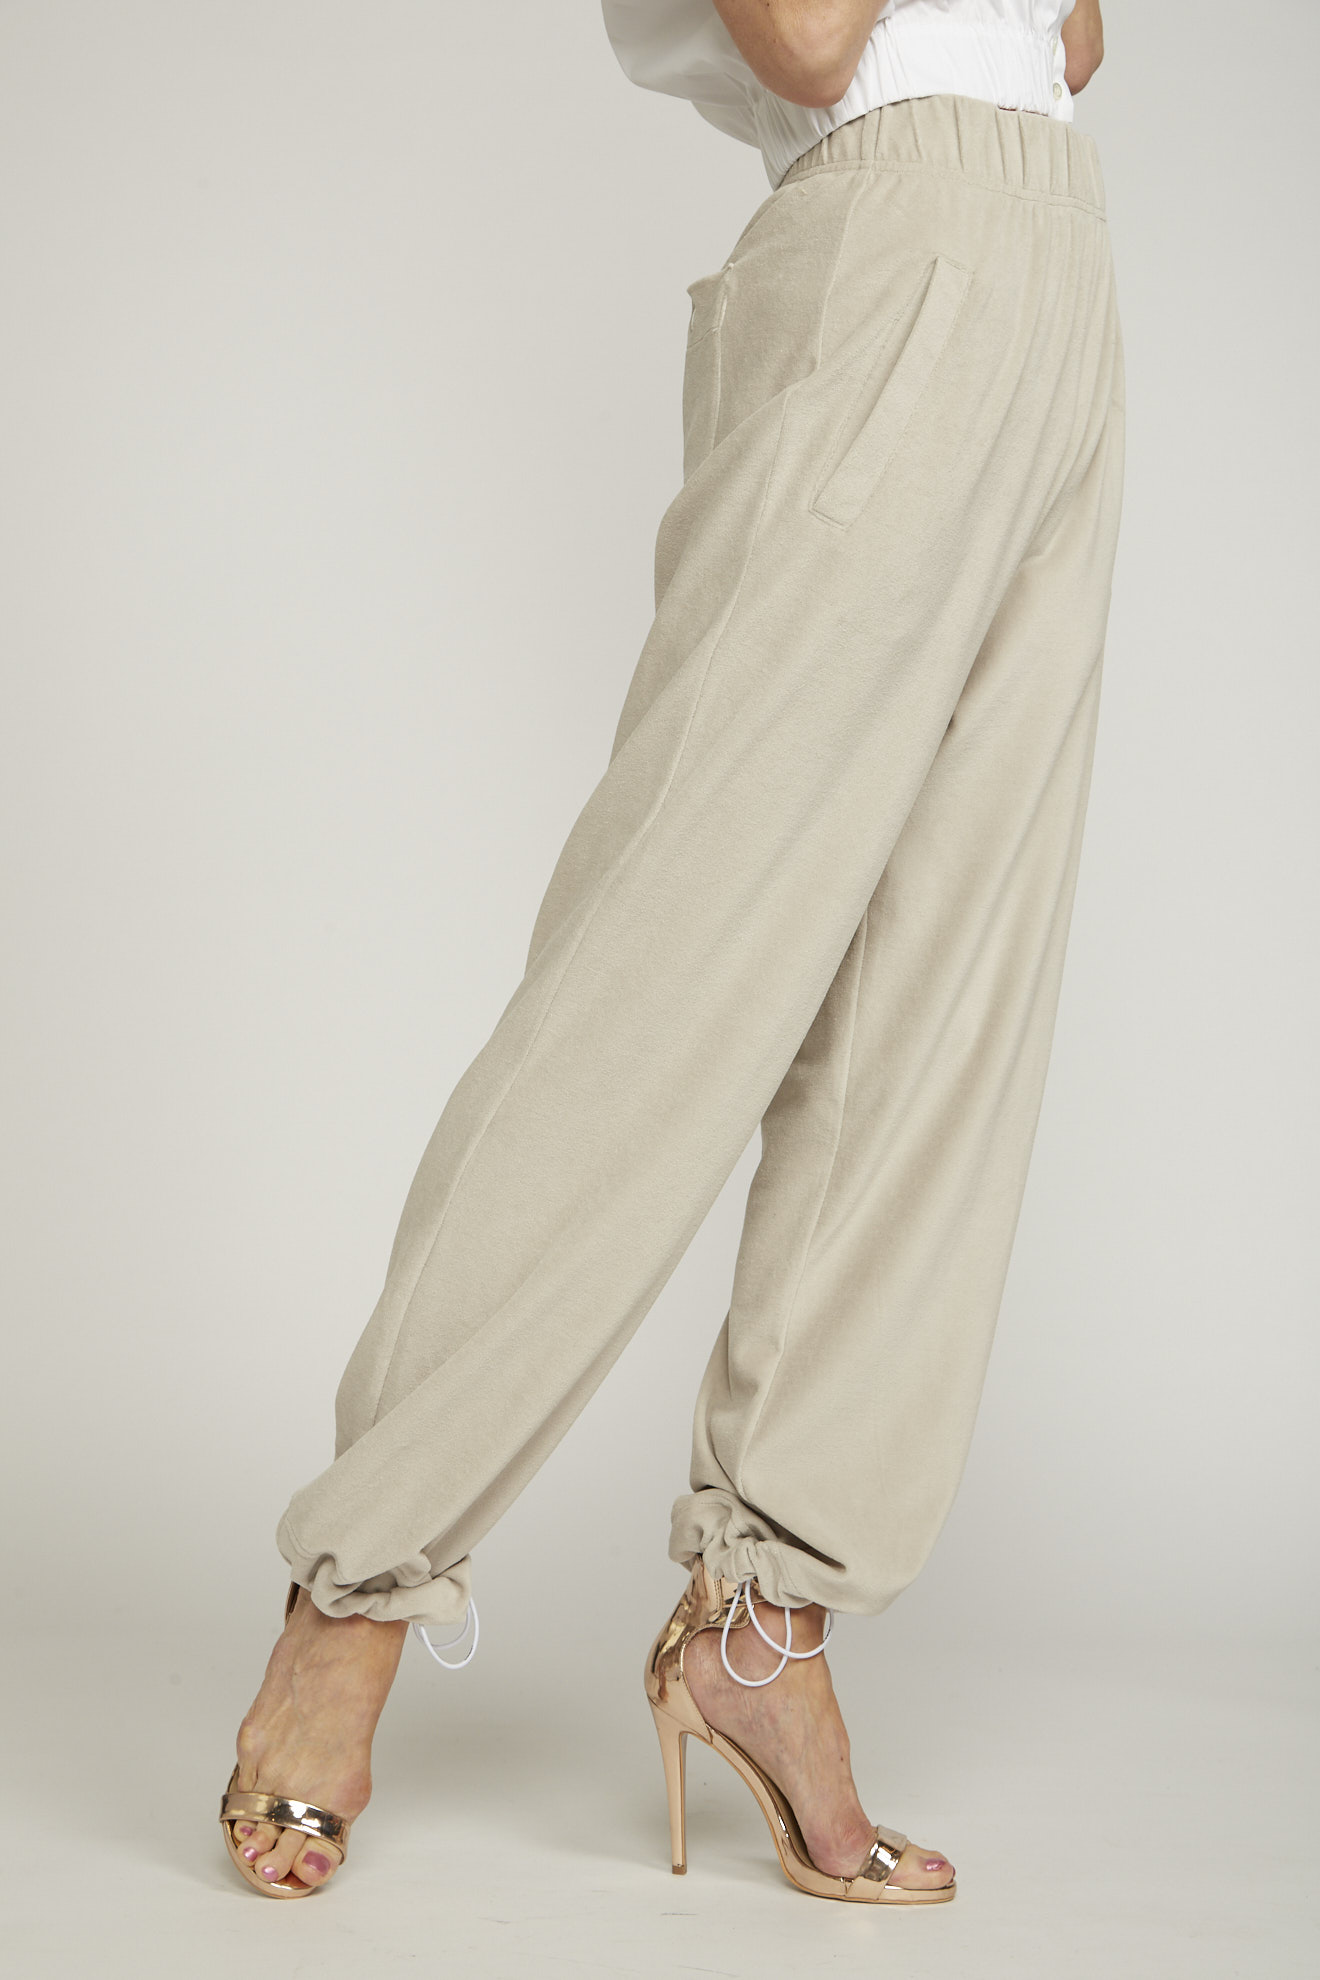 khrisjoy pants grey plain cotton model front